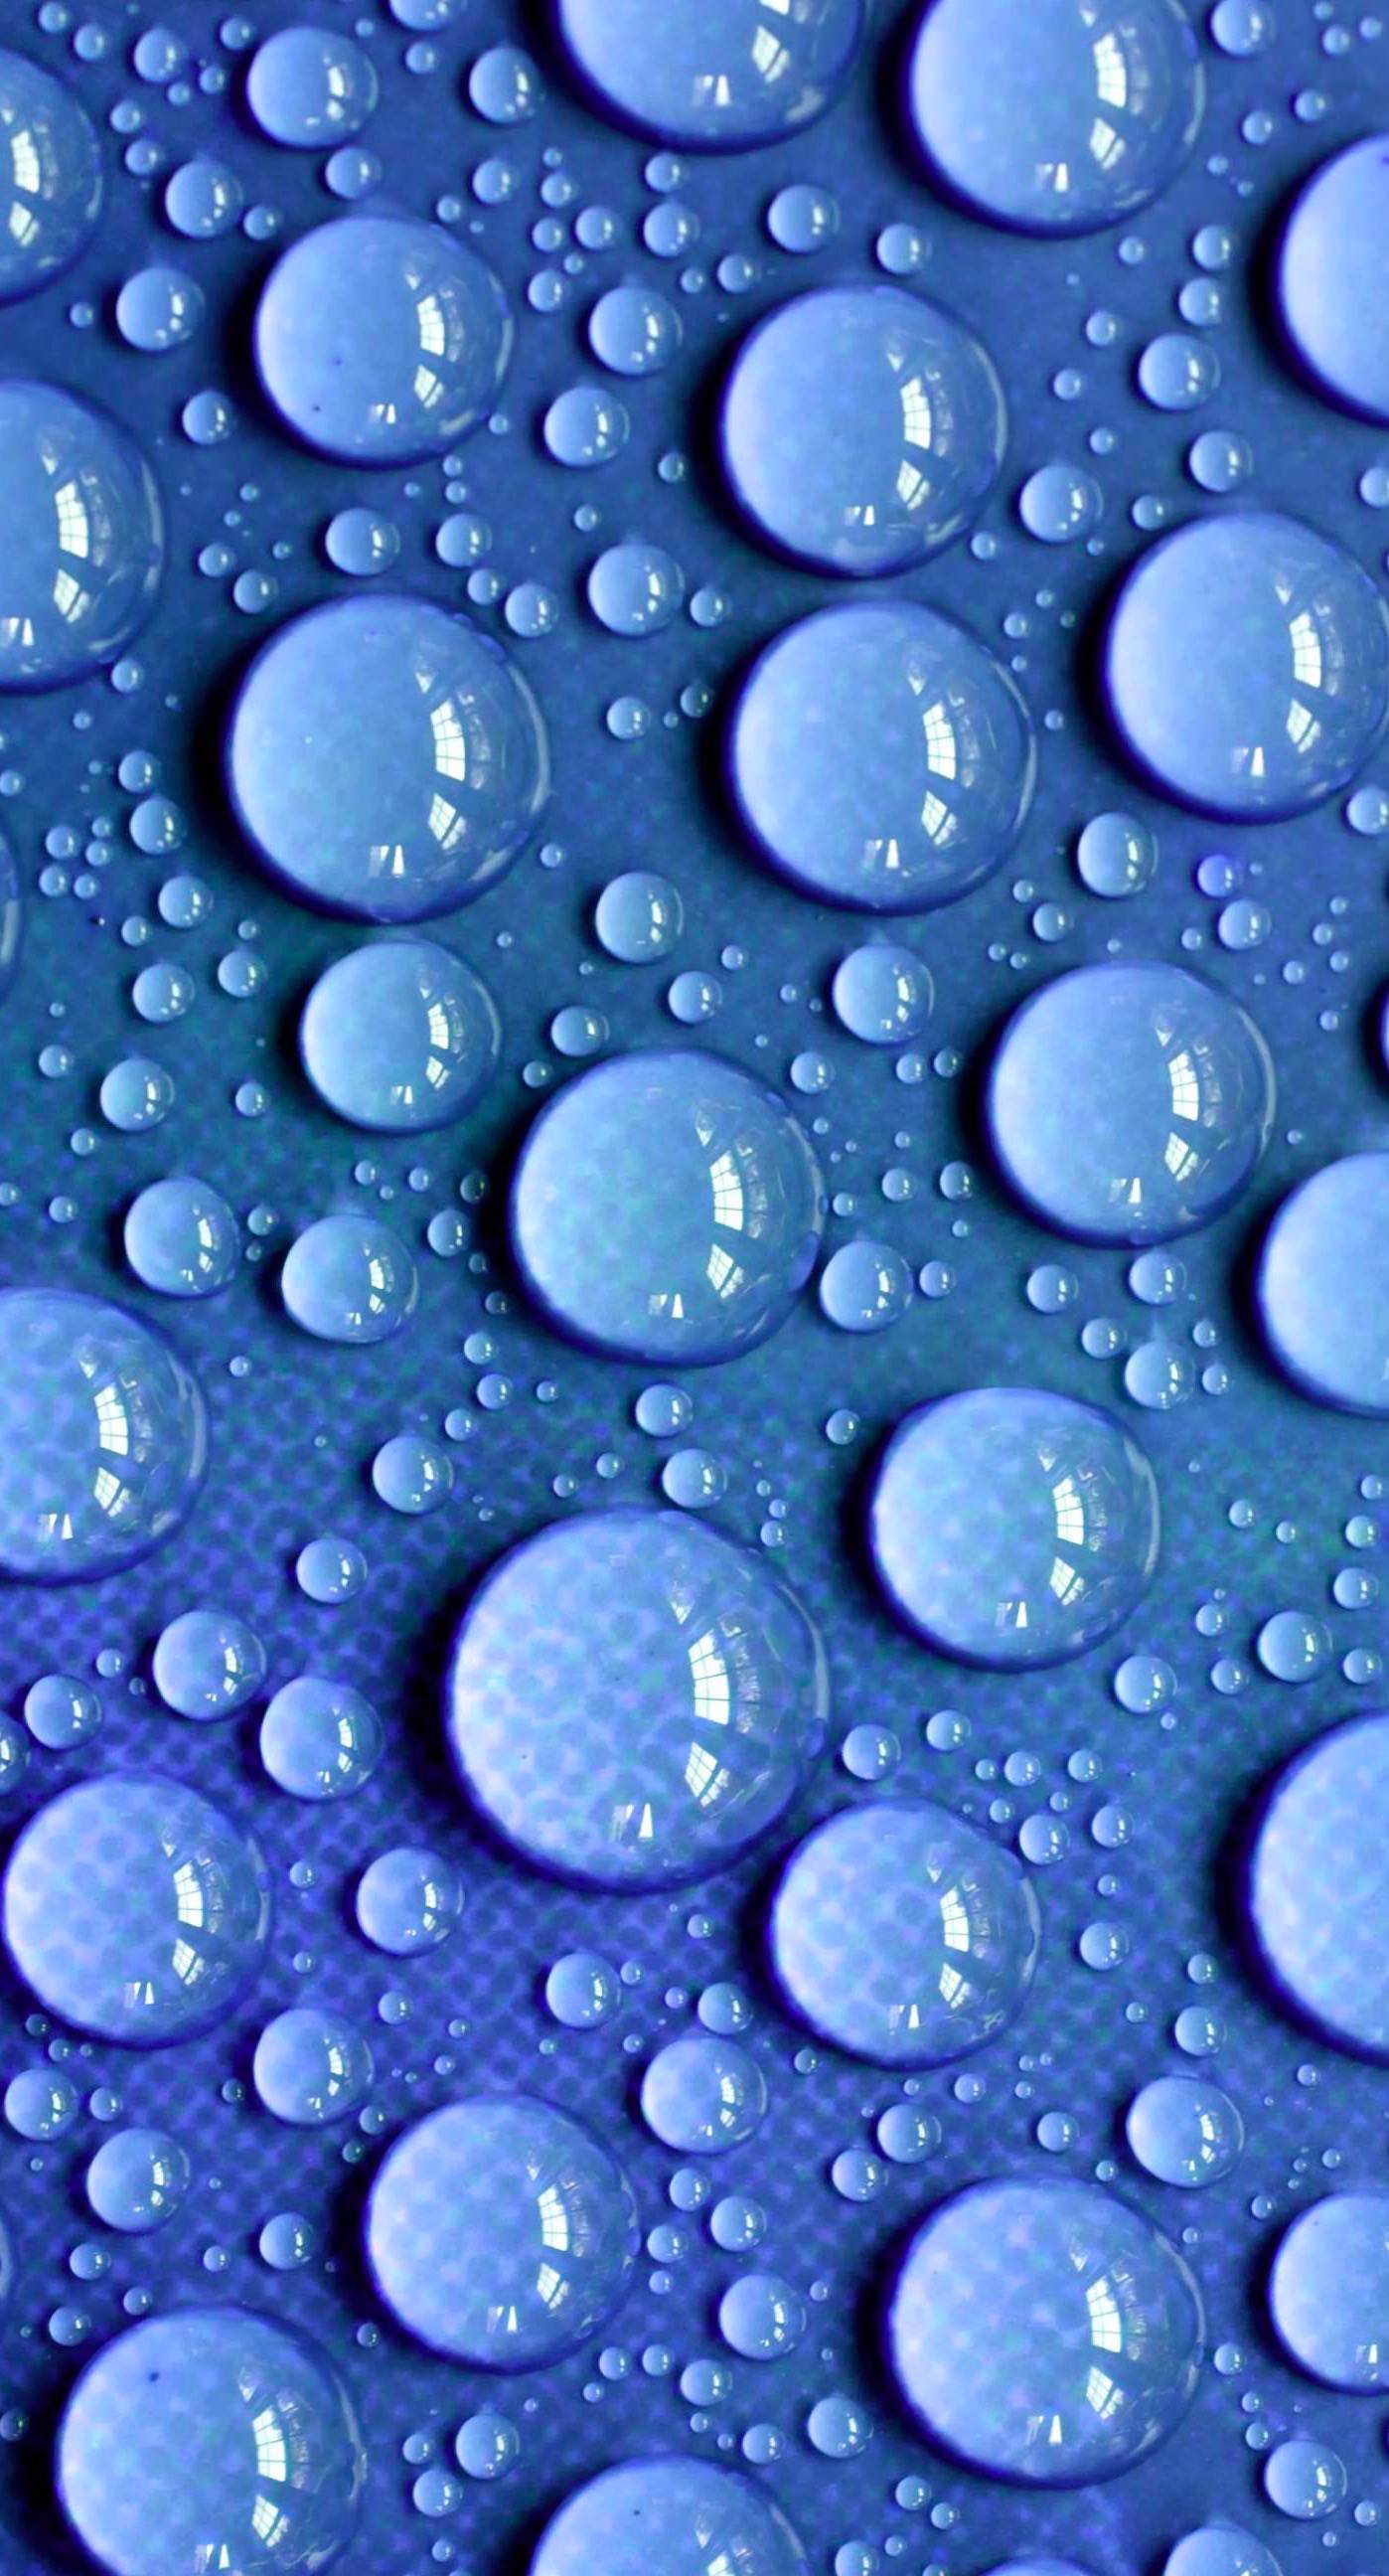 Natural Water Drops Blue Wallpapersc Iphone6splus